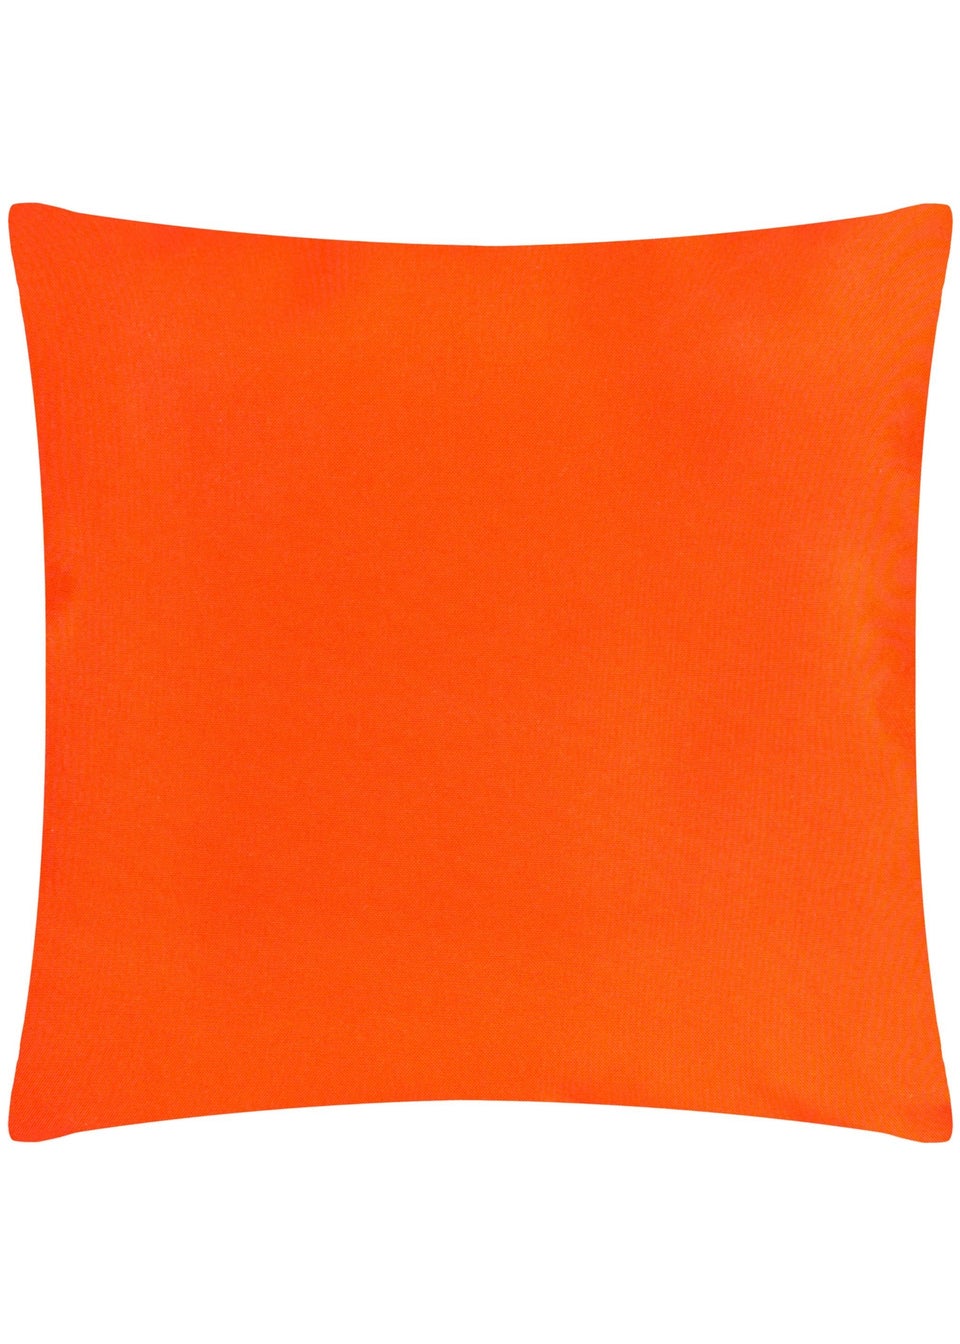 furn. Aqua Peachy Filled Outdoor Cushions (43cm x 43cm x 8cm)